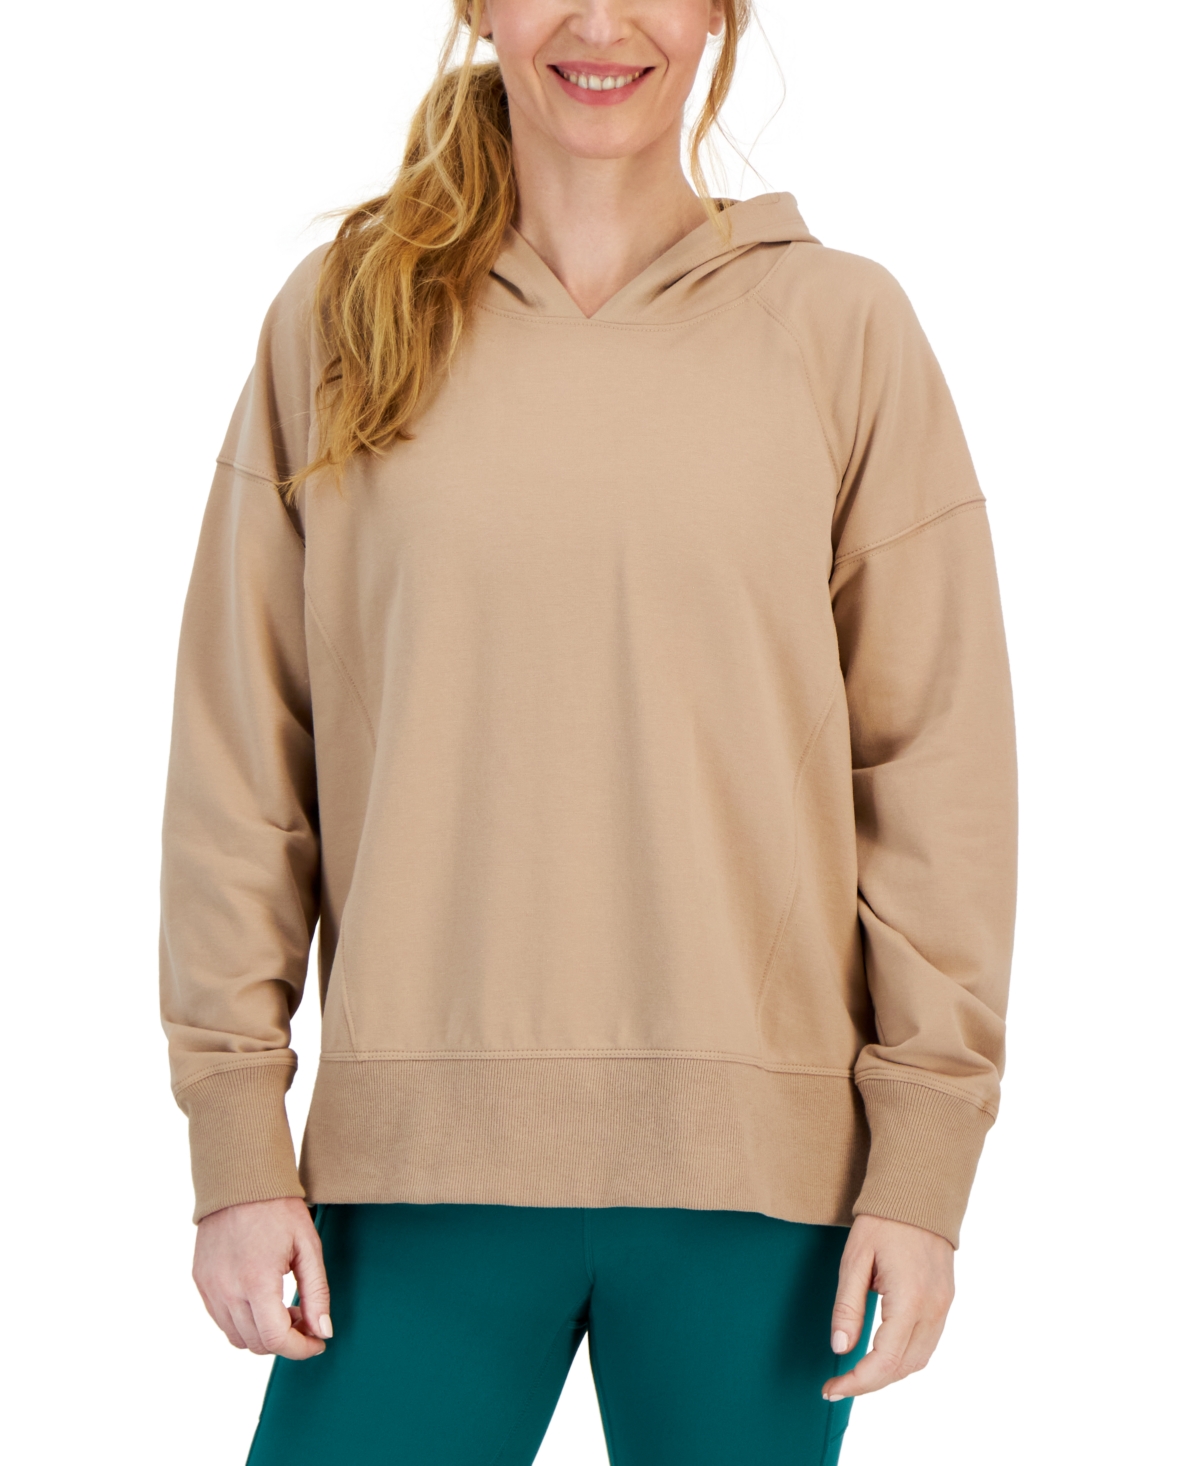 Women's Comfort Flow Hooded Sweatshirt, Created for Macy's - Skysail Blue